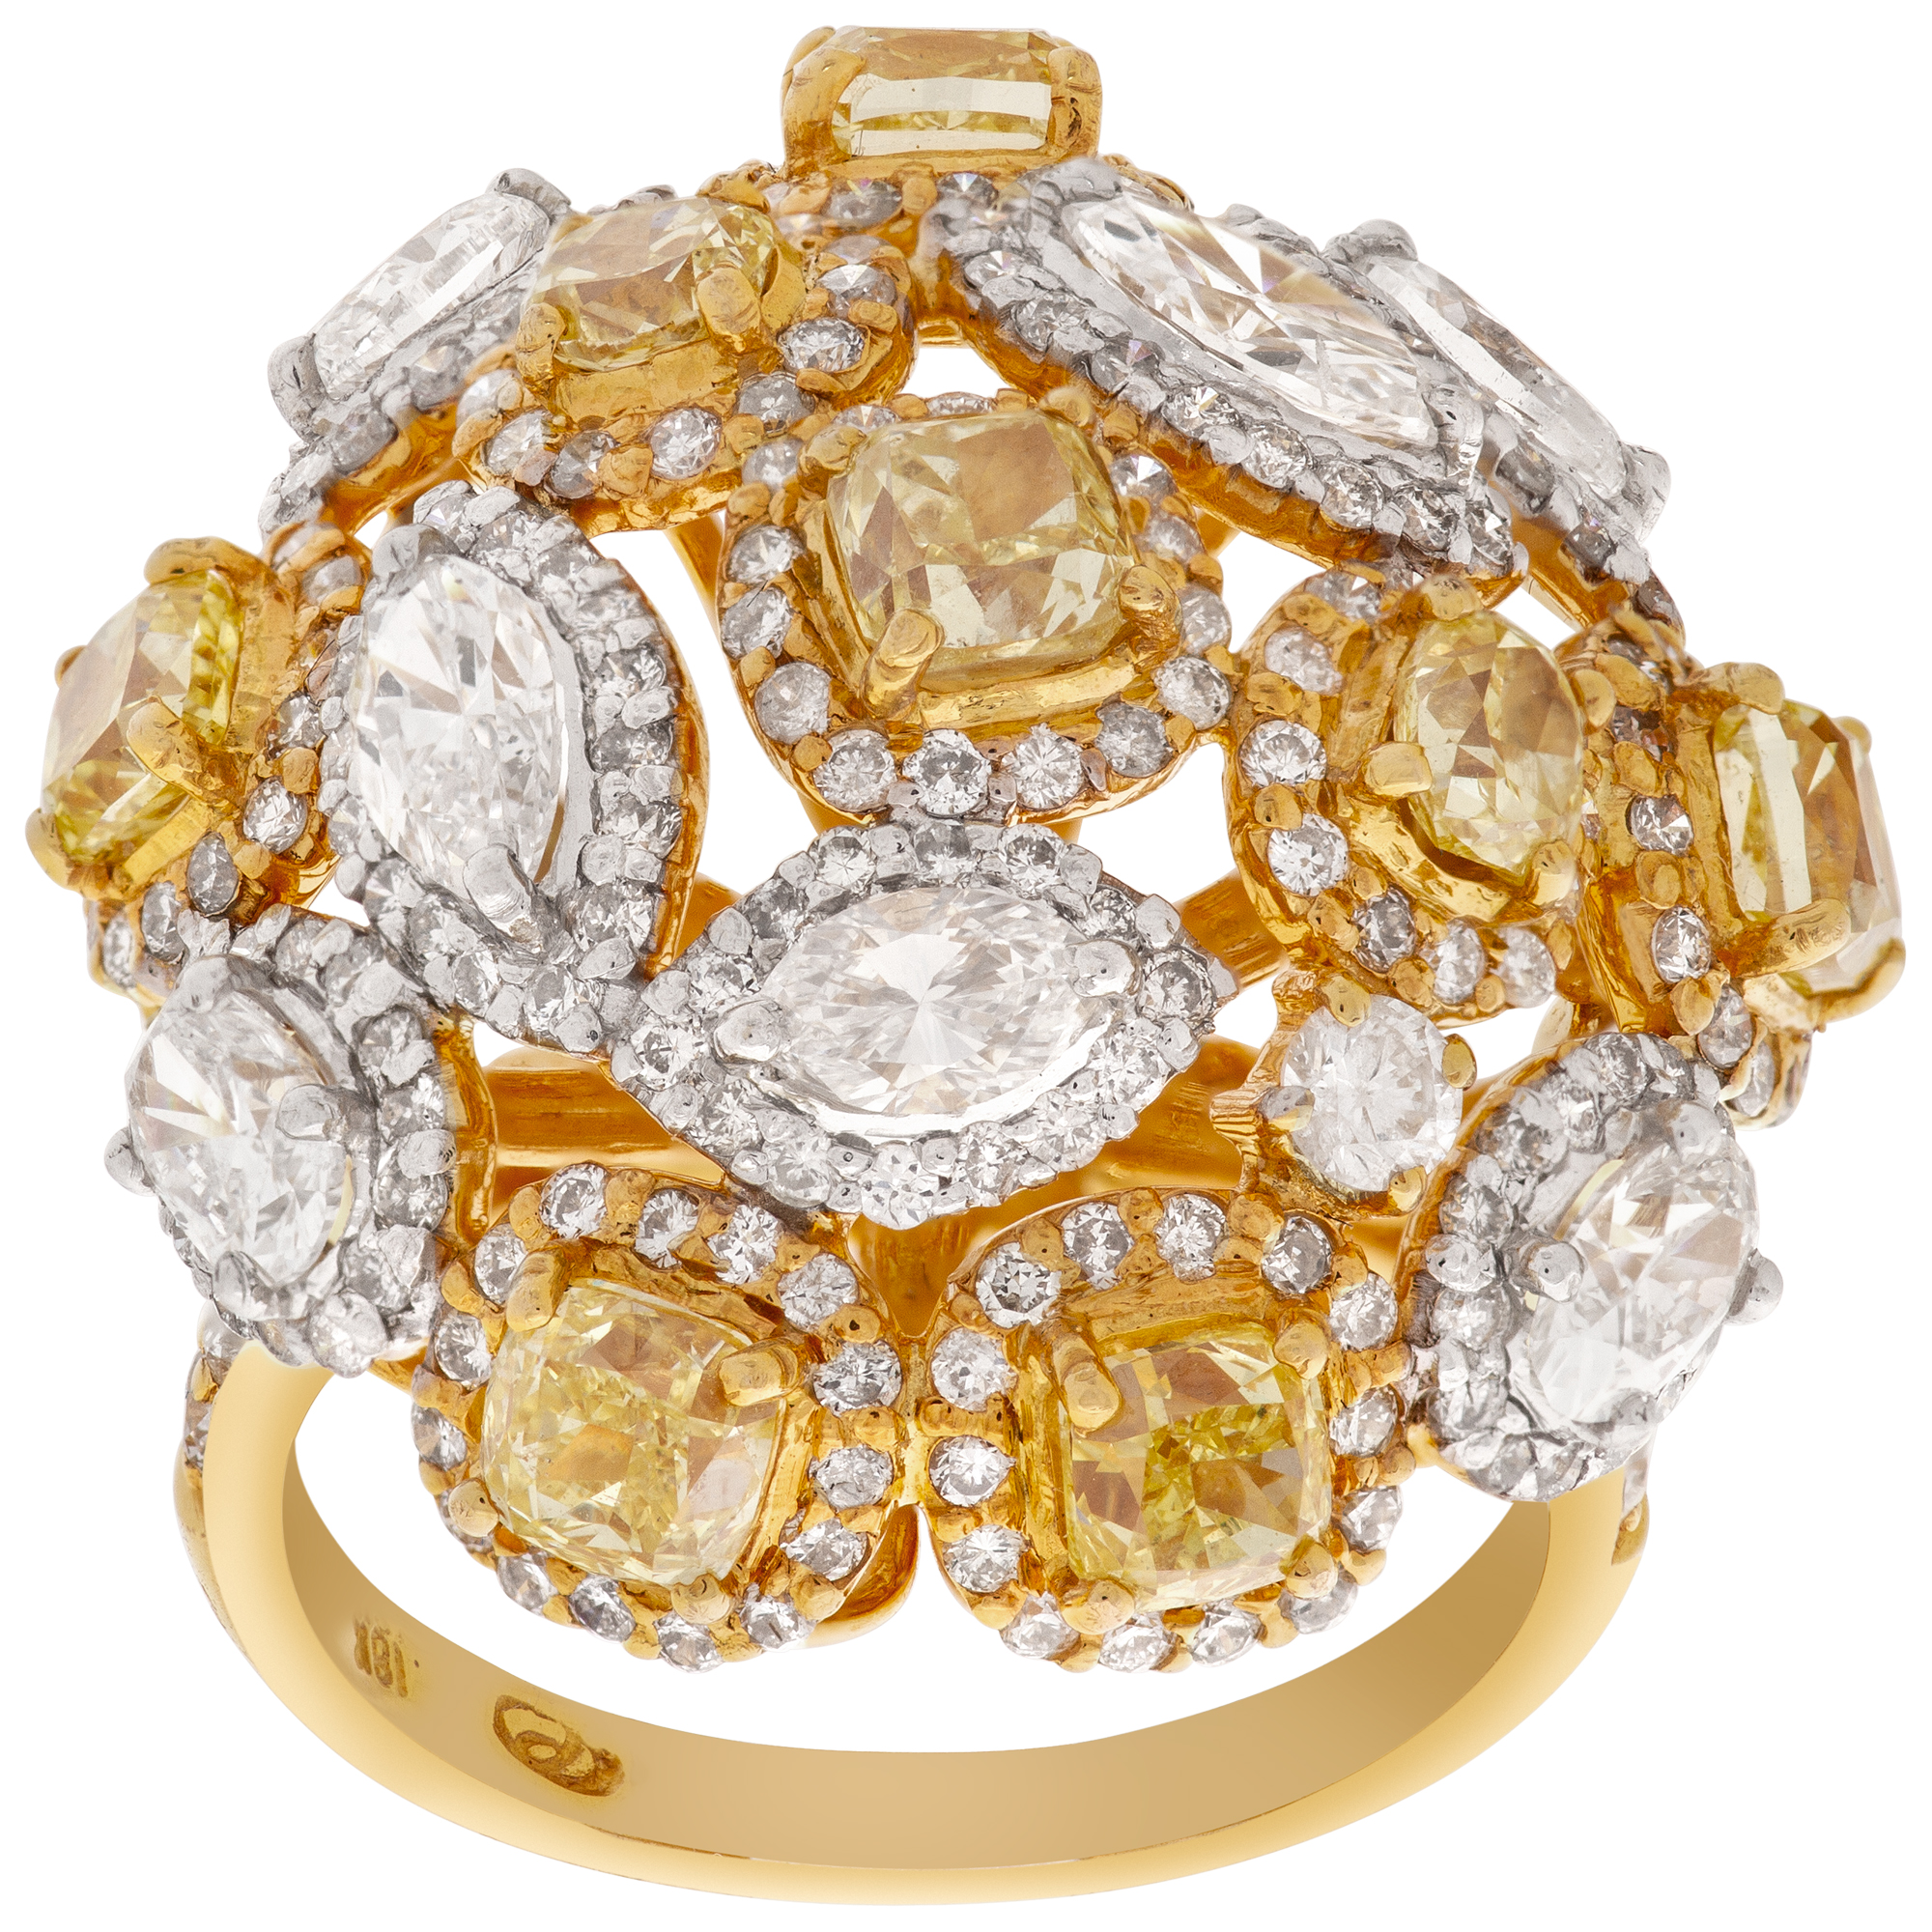 Fancy white & yellow diamond ring set in 18k yellow gold